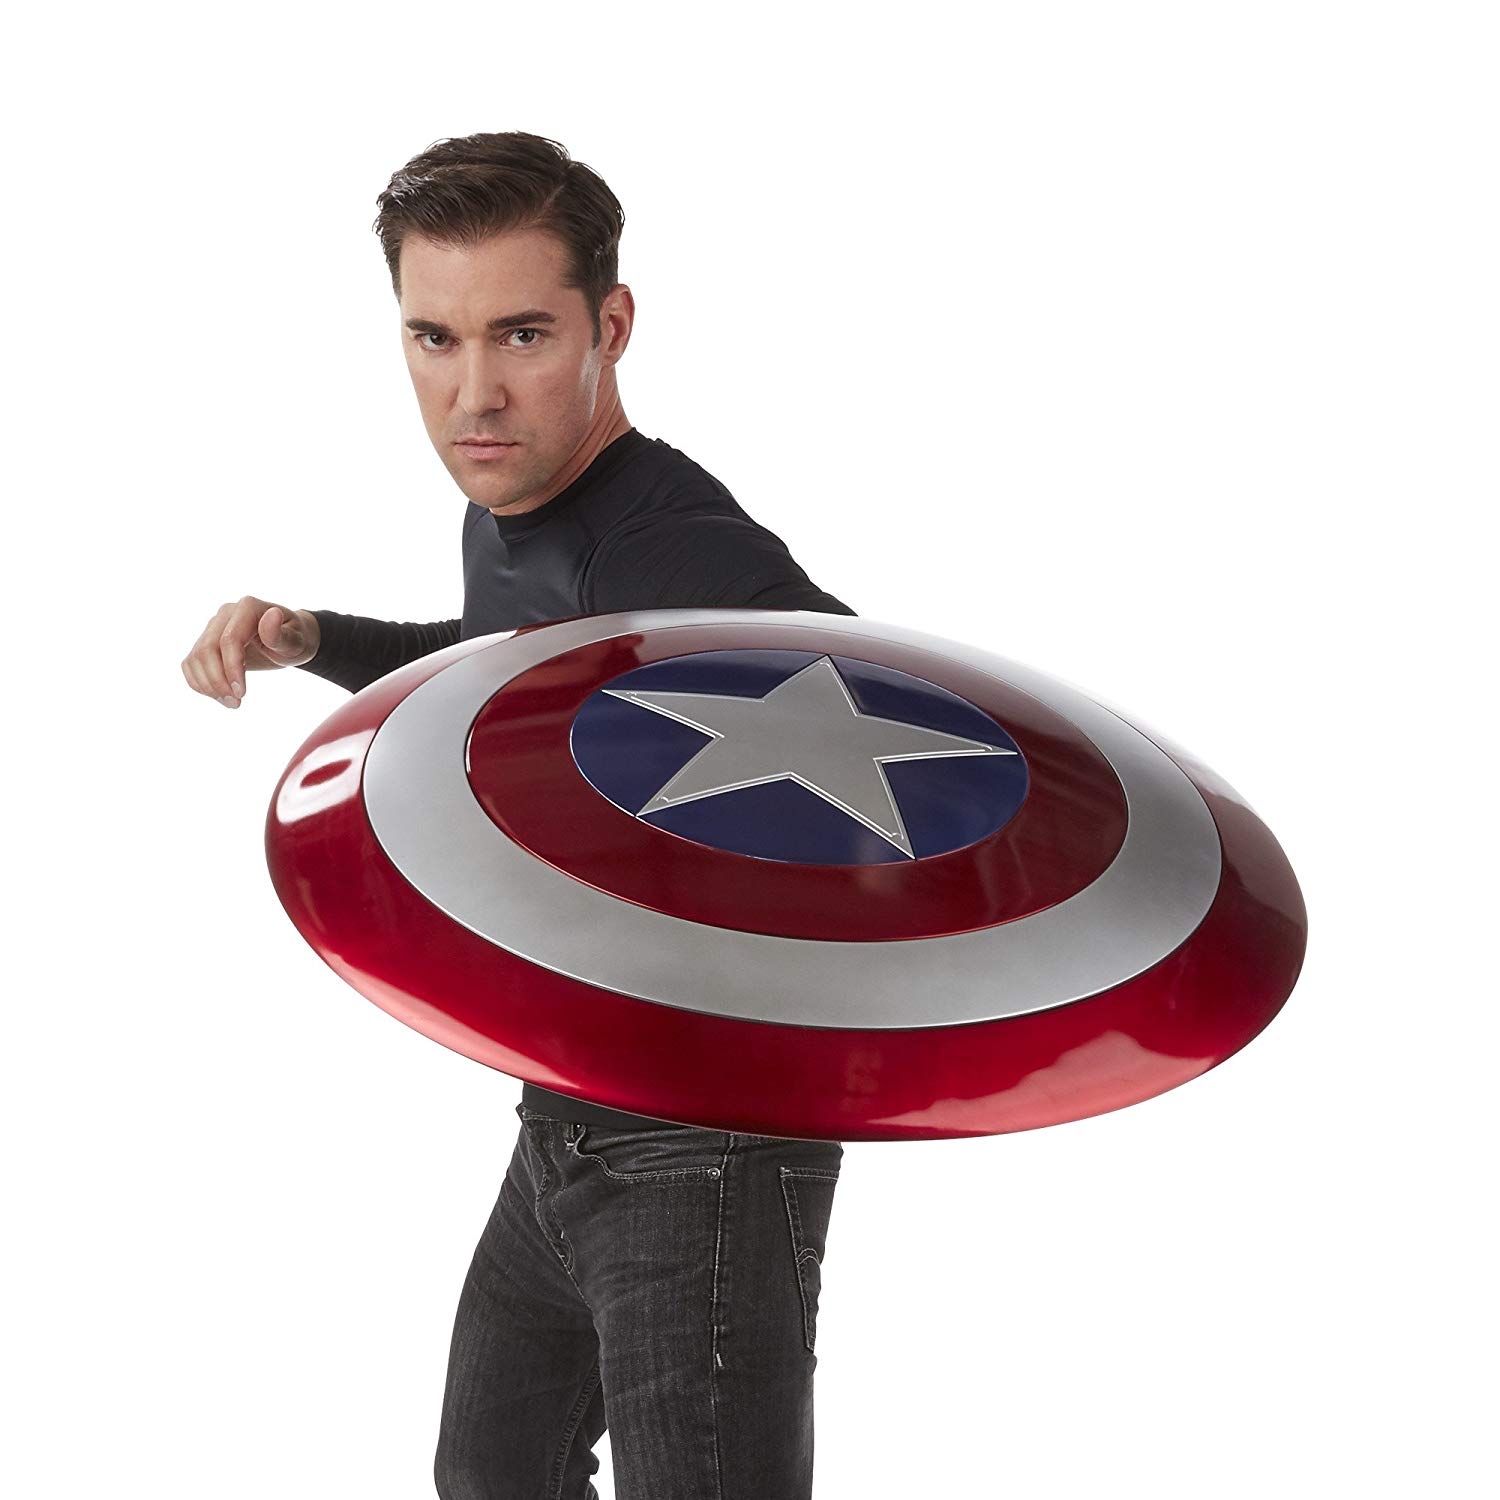 Captain America's shield for Christmas